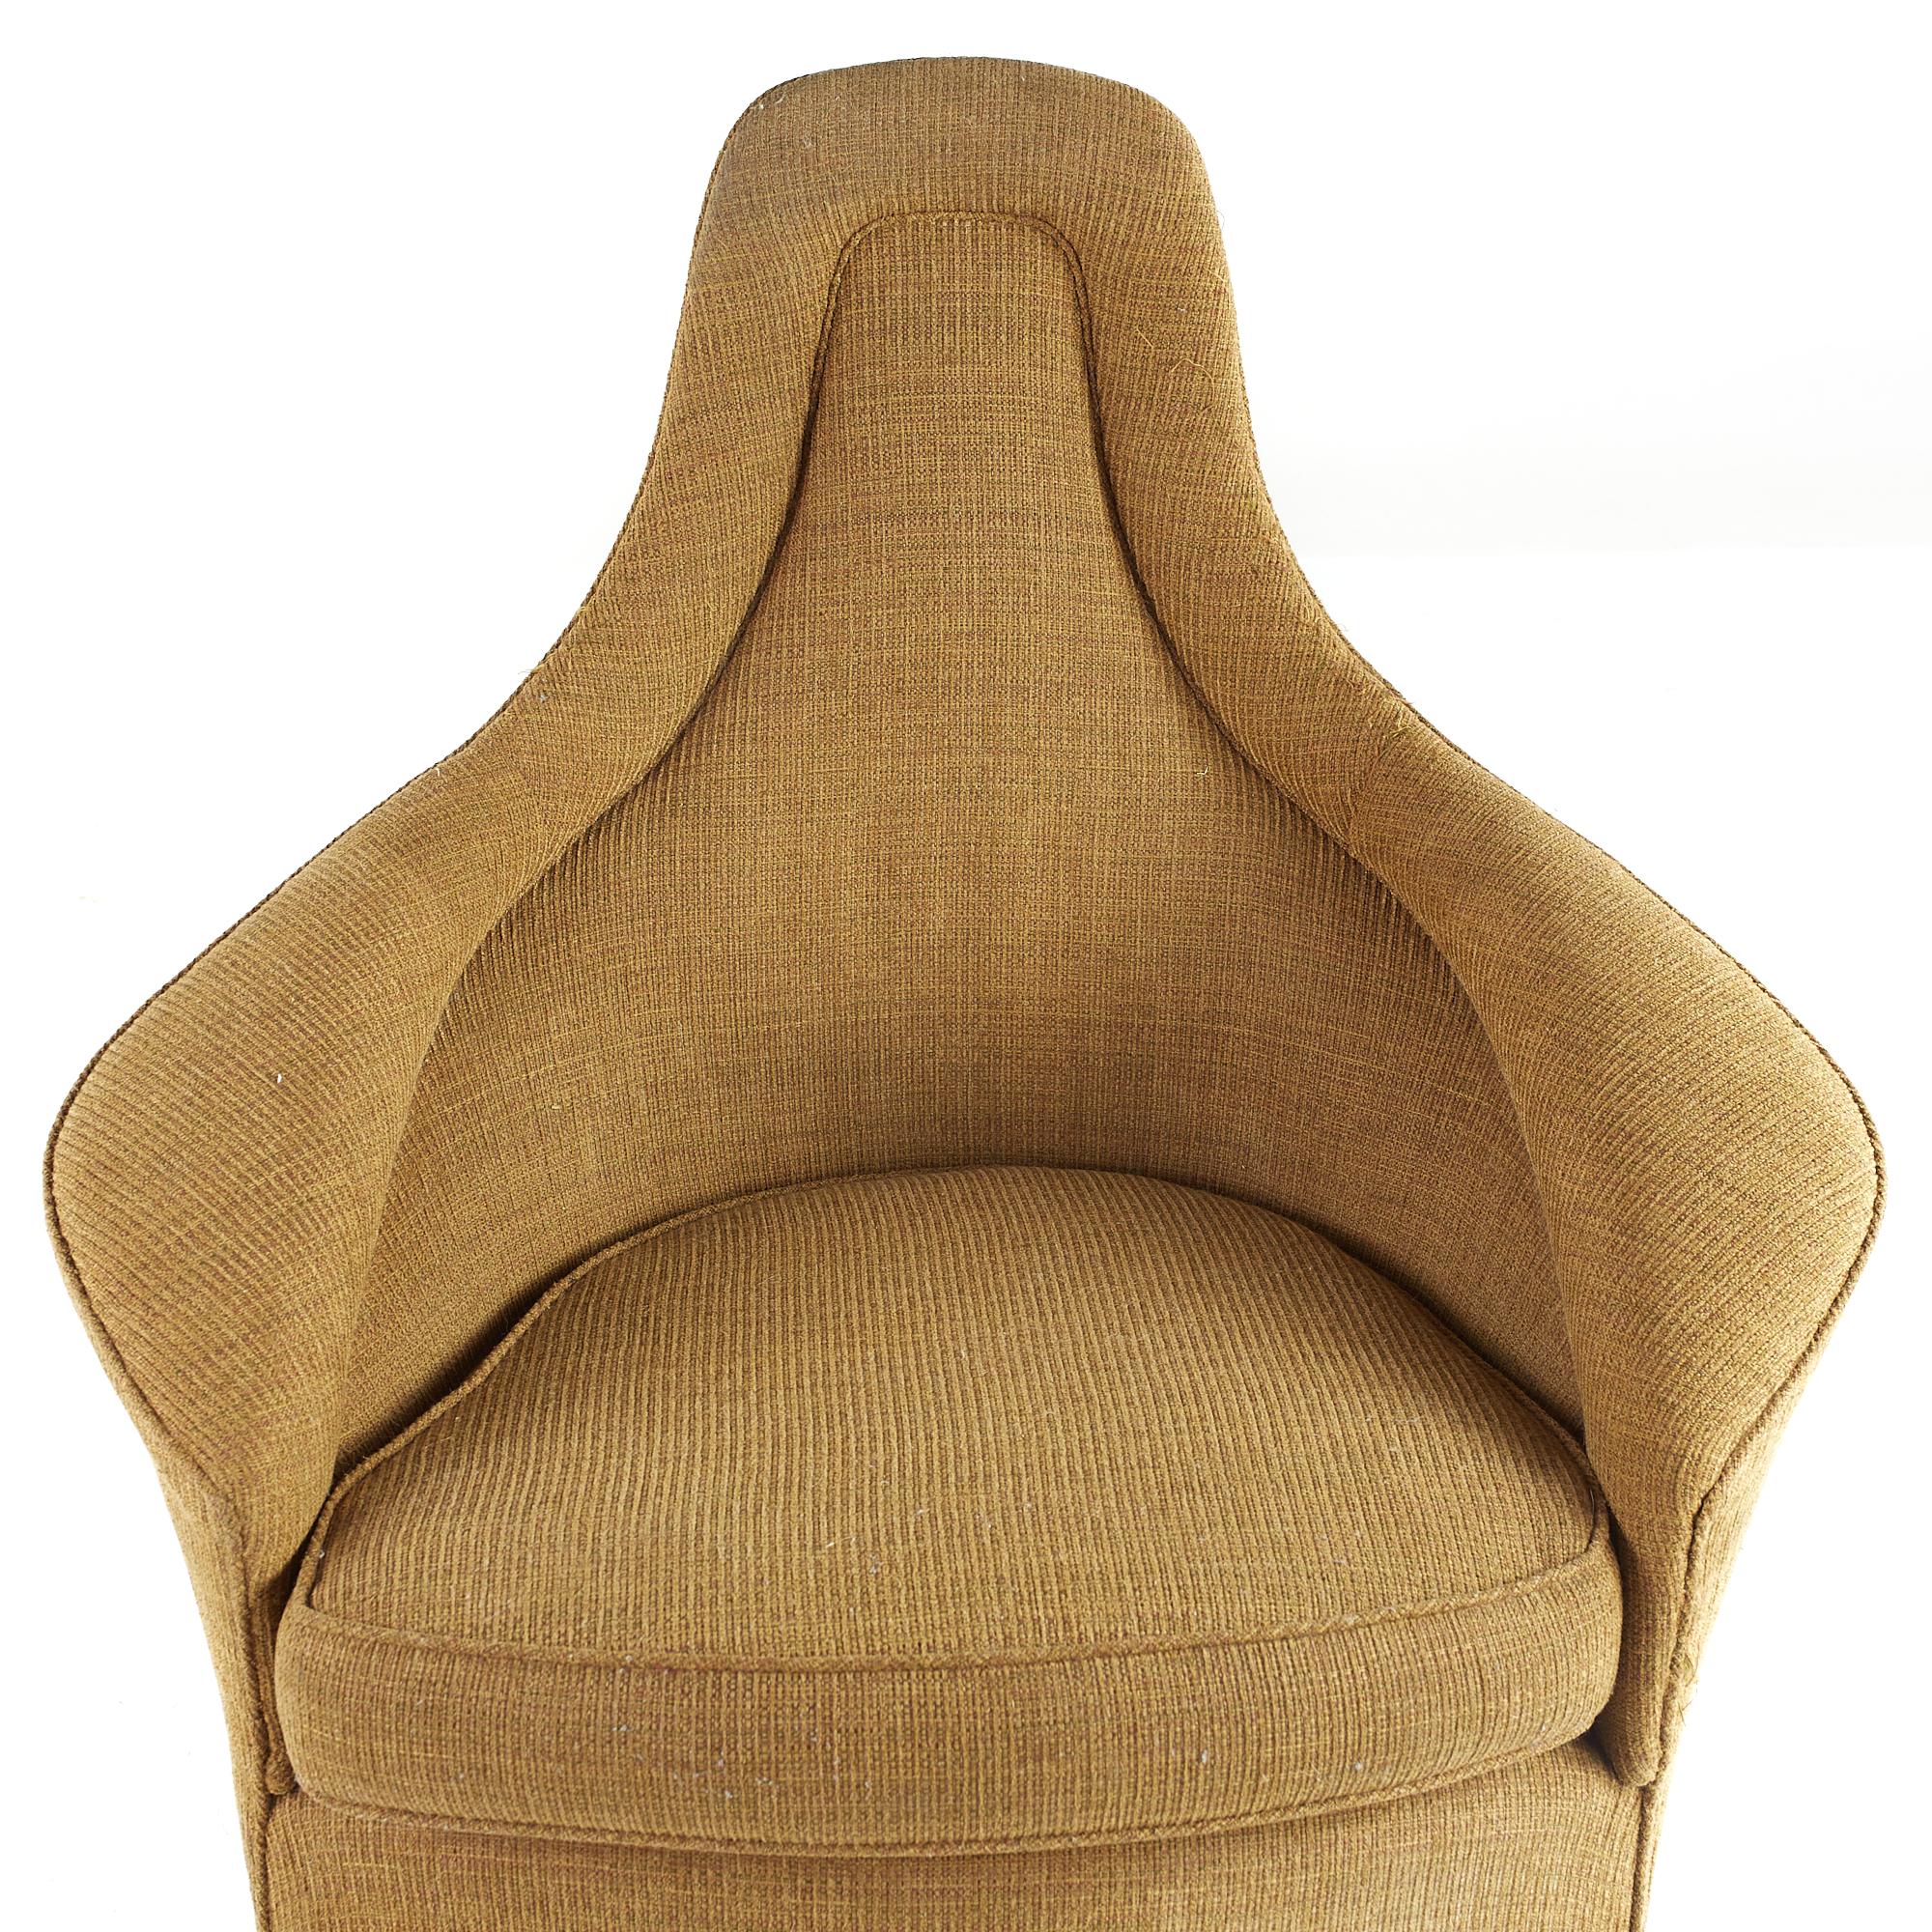 Adrian Pearsall for Craft Associates Midcentury Swivel Tilt Chair For Sale 2